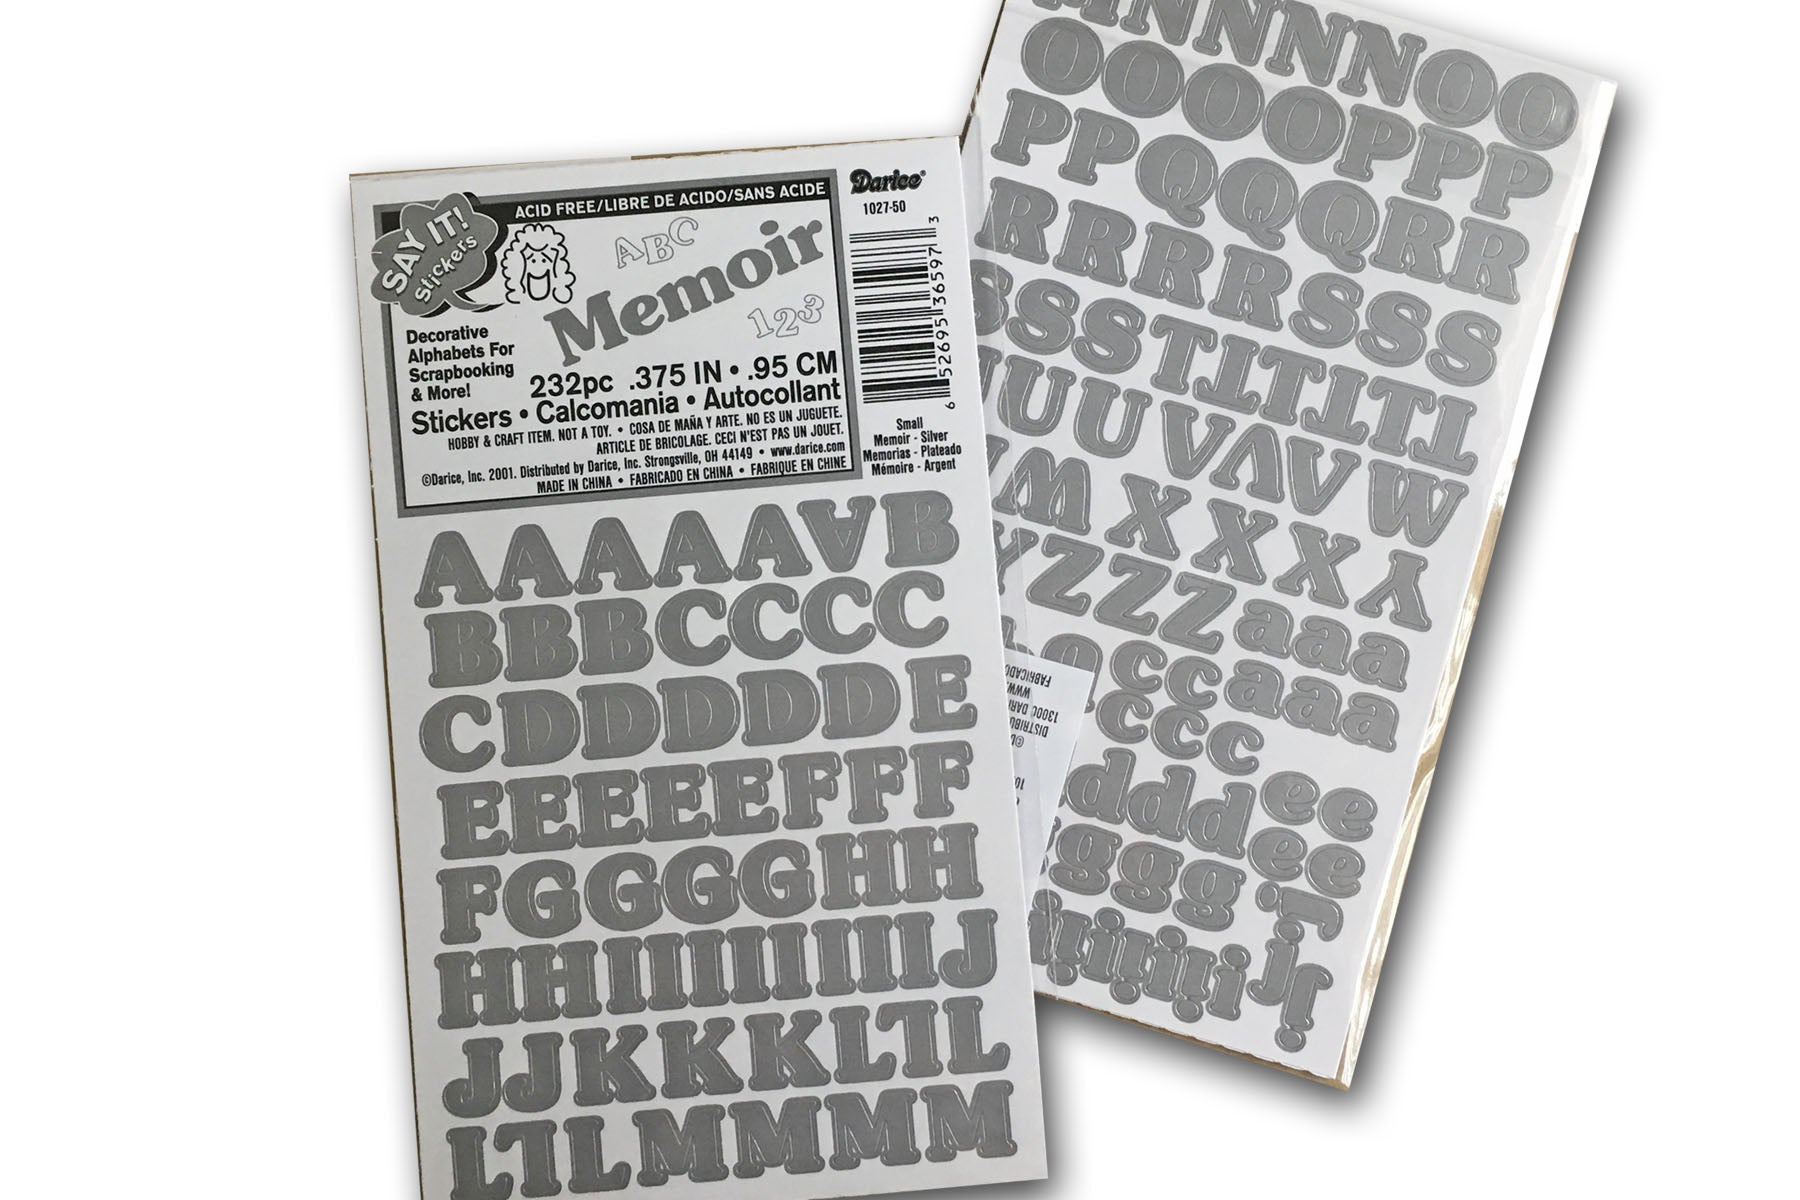 5 Pcs Scrapbook Letter Stickers Colorful Self Adhesive Alphabet